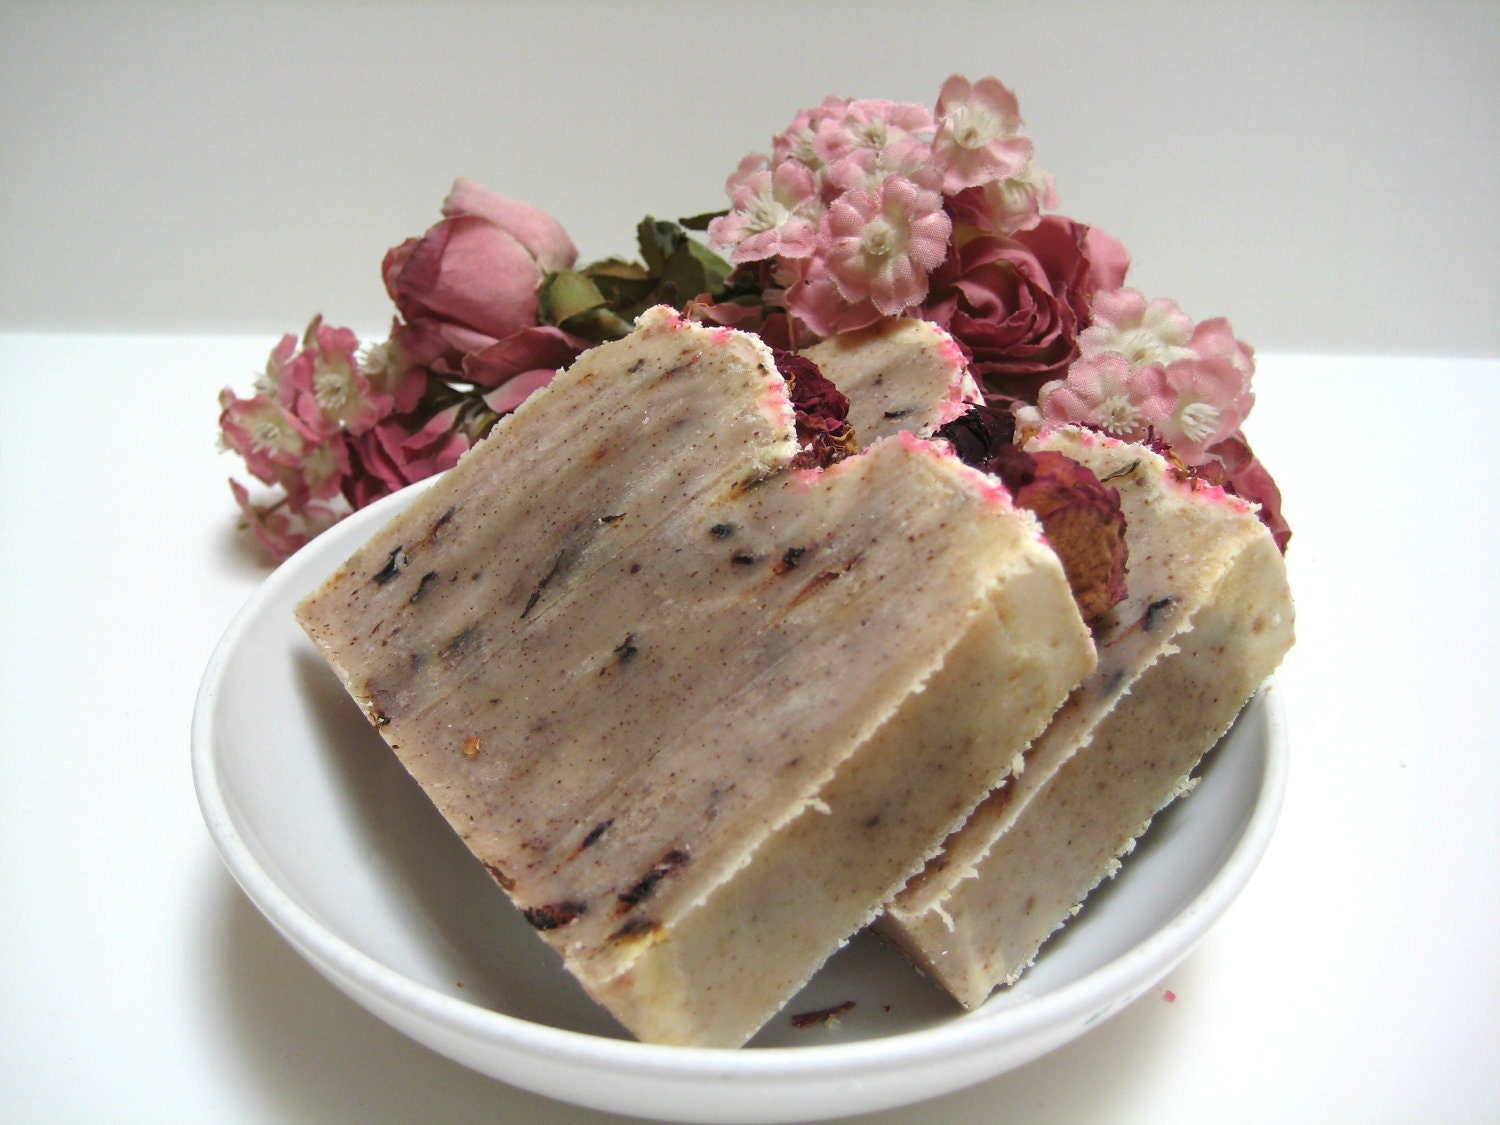 Rosehip and Geranium Soap - Spa Quality with botanical essences - Vegan Artisan soap from scratch